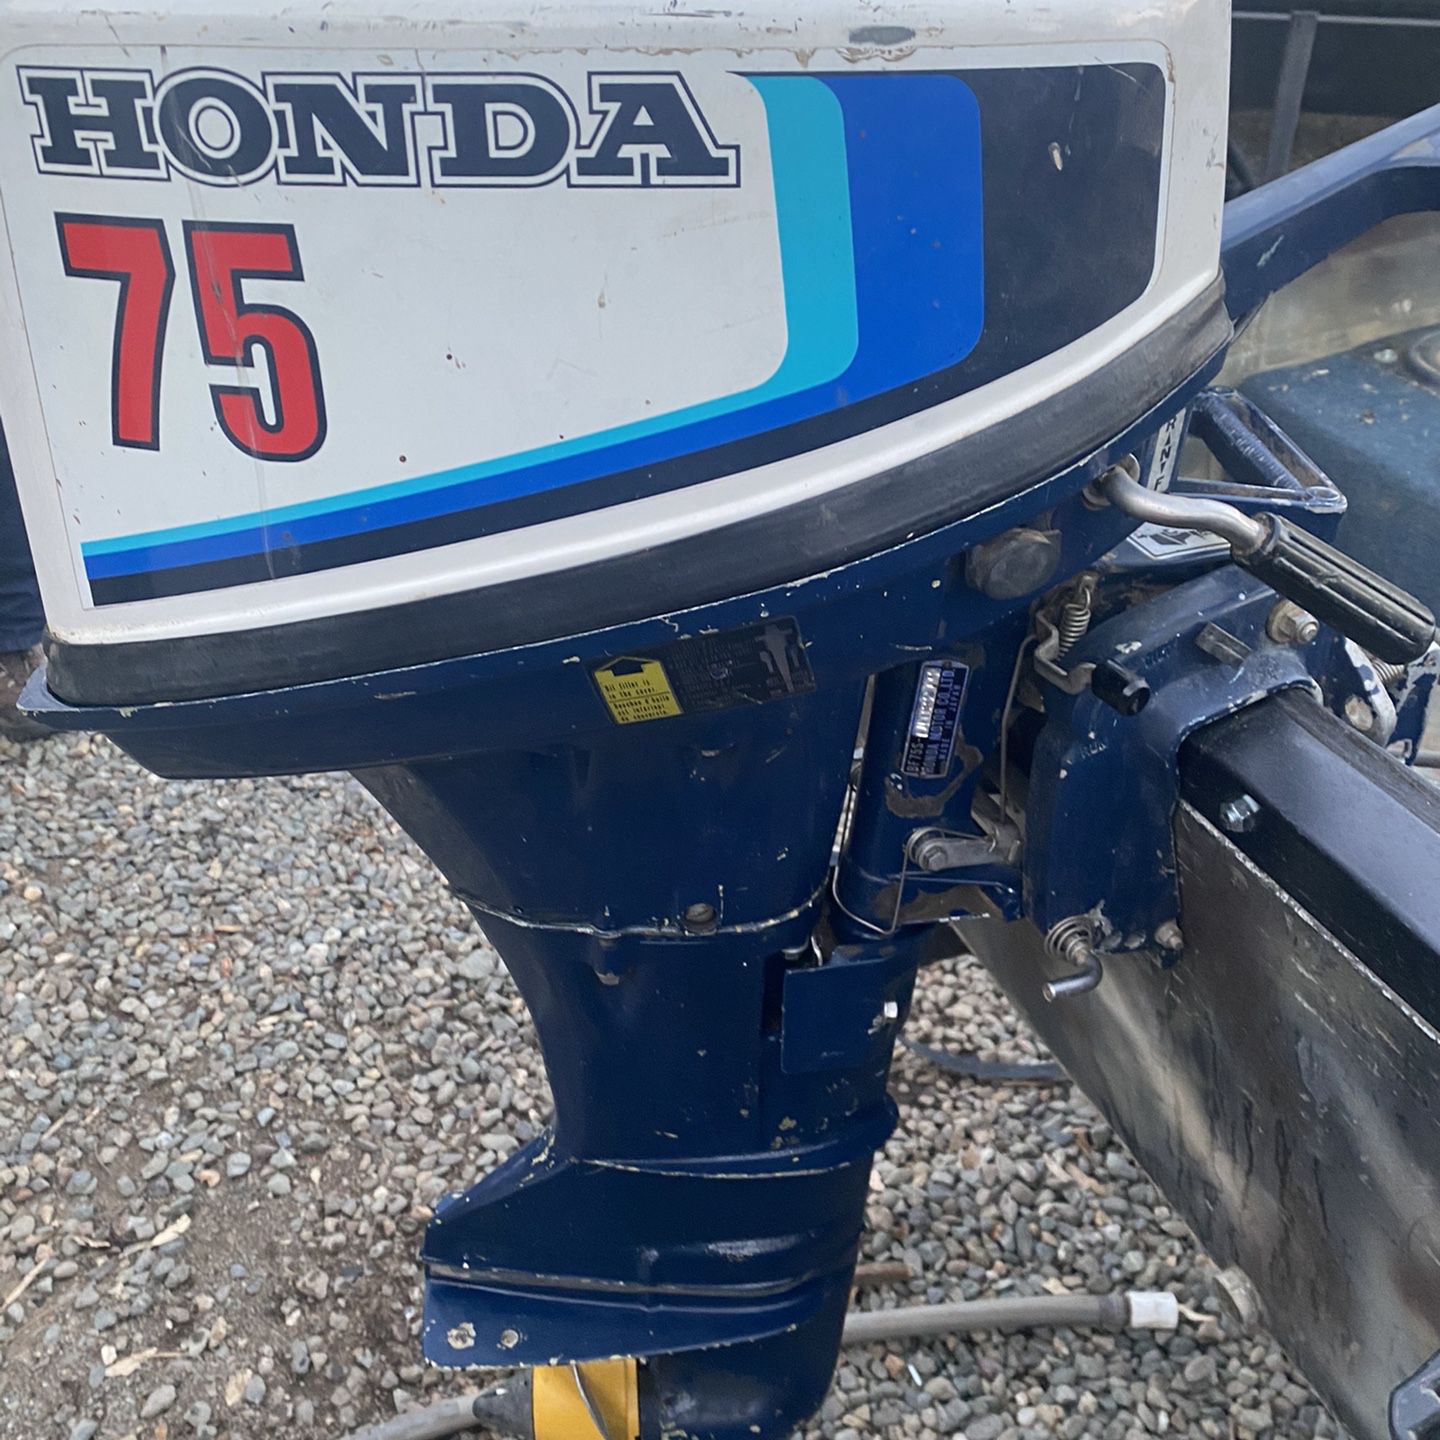 Bass Hound 10.5 + 100 Honda Motor for Sale in Hayward, CA - OfferUp